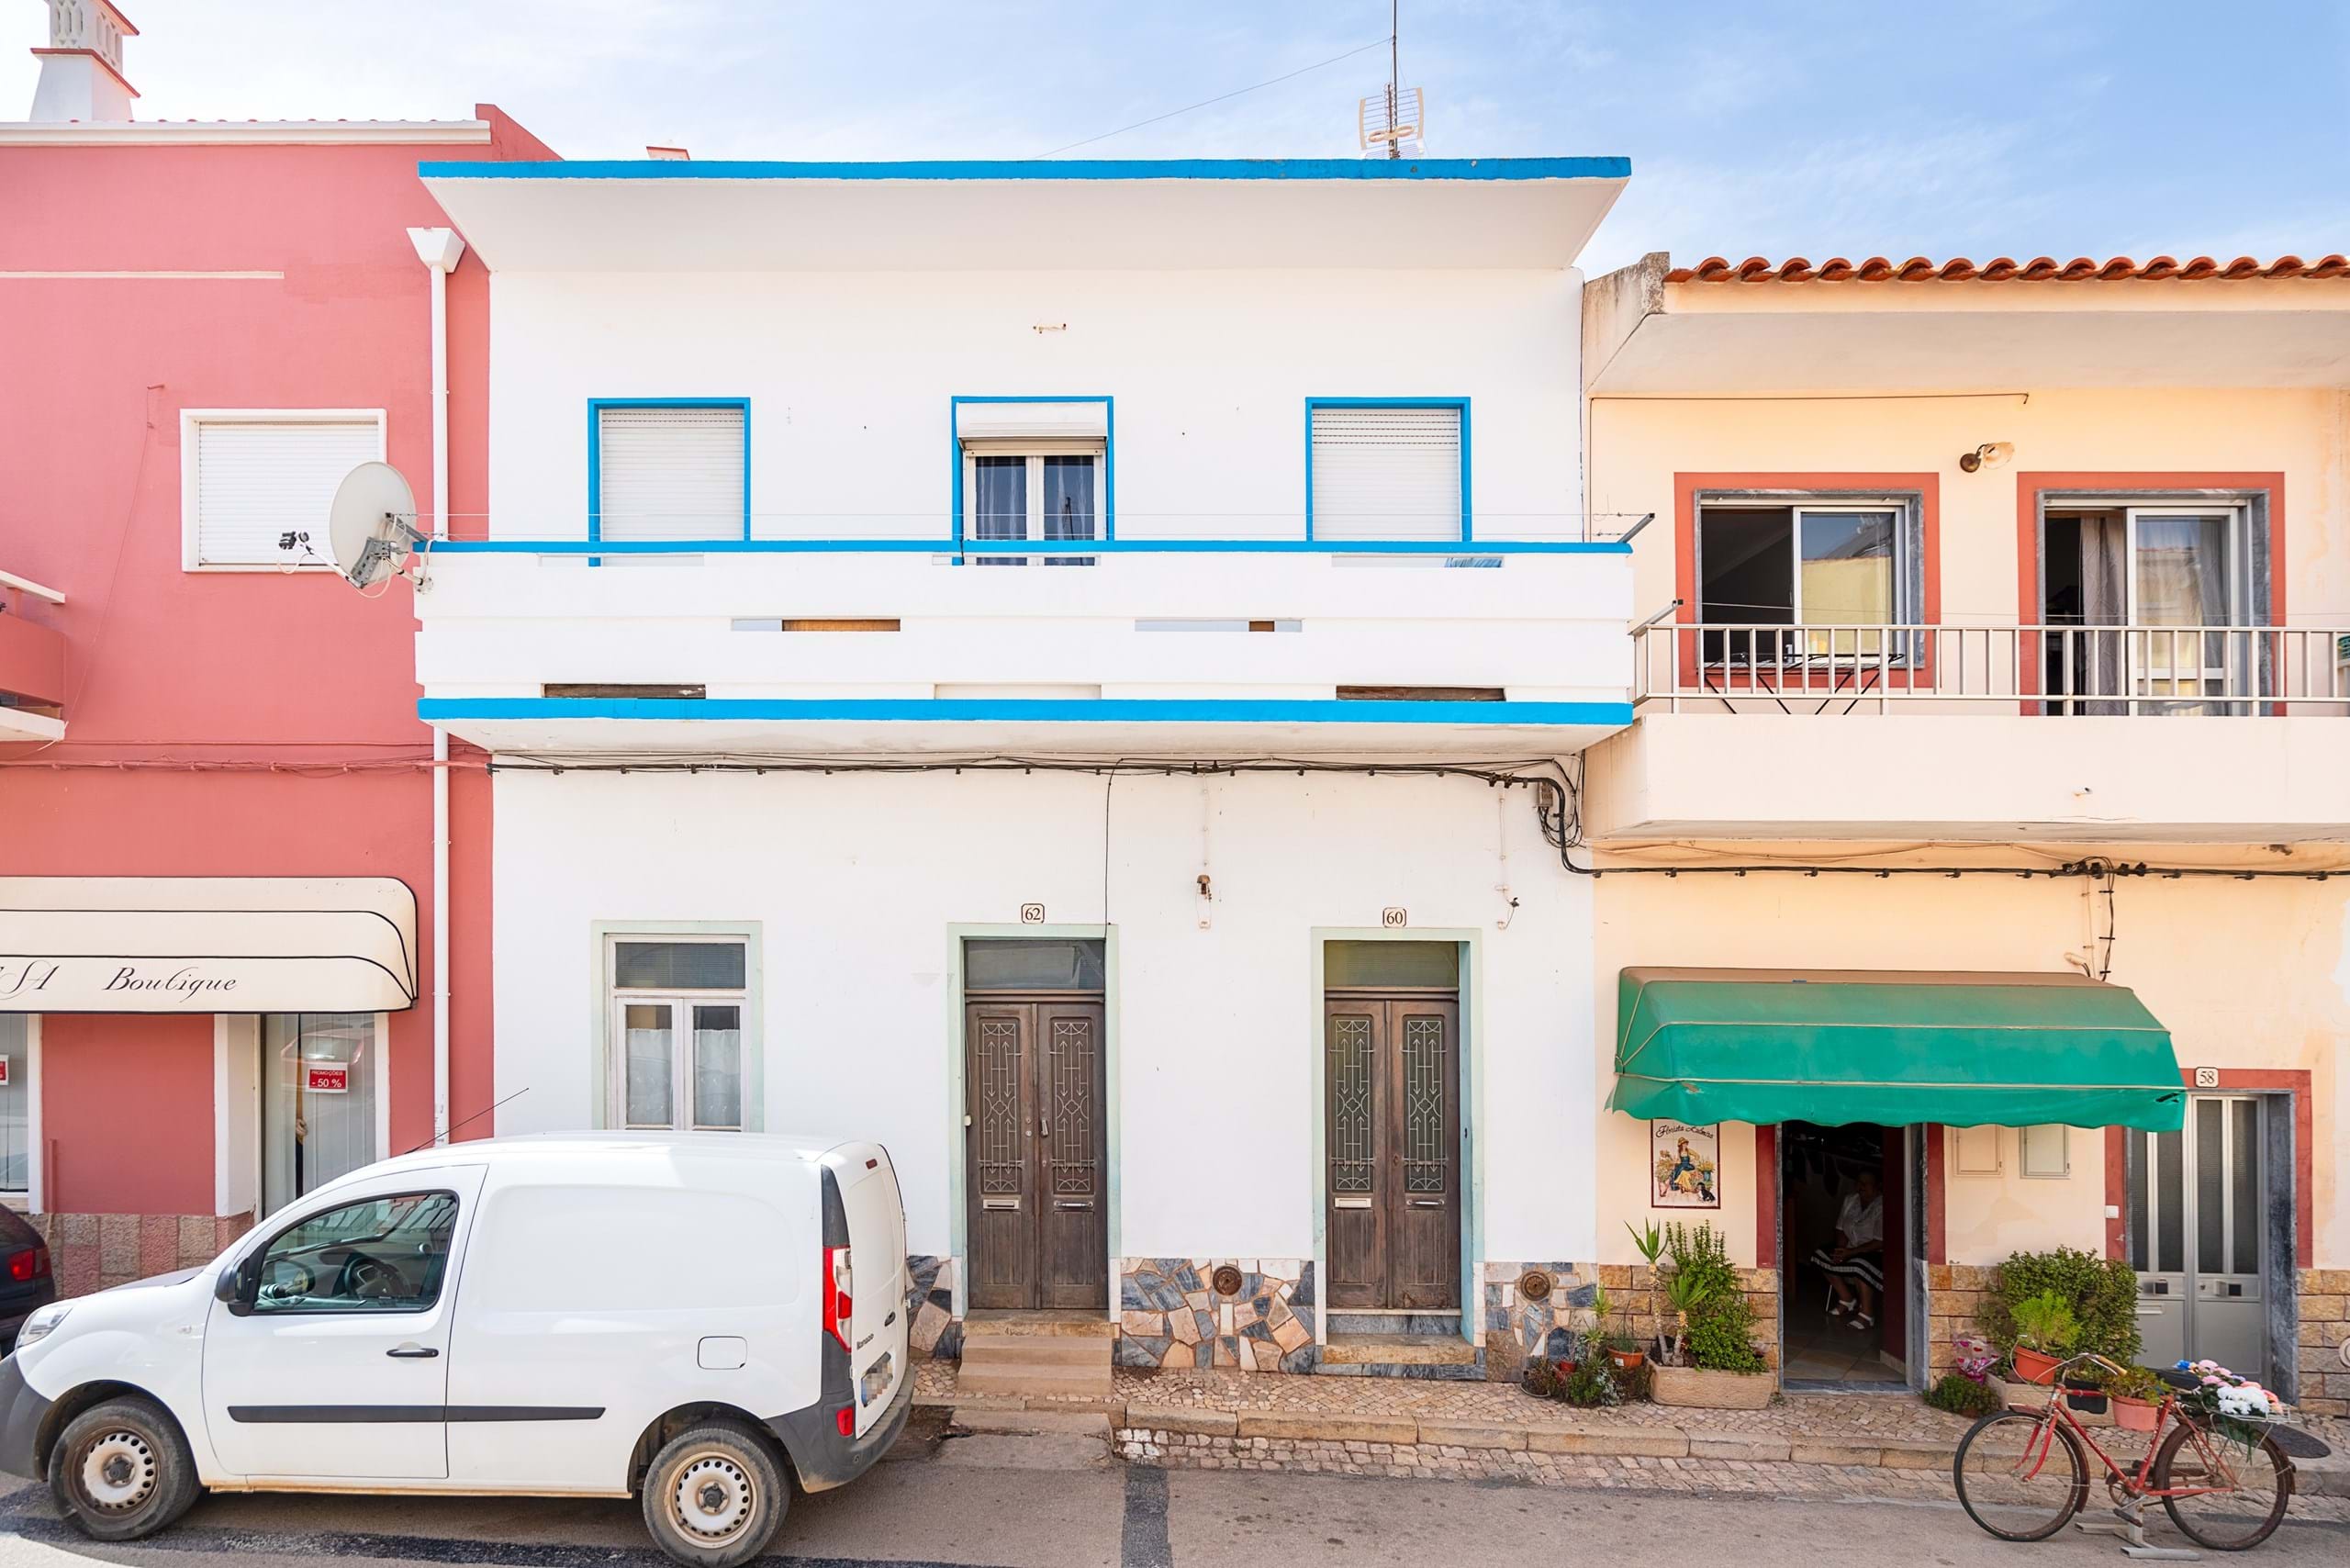 2 Bedroom Renovation Project For Sale in the Algarve, Portugal